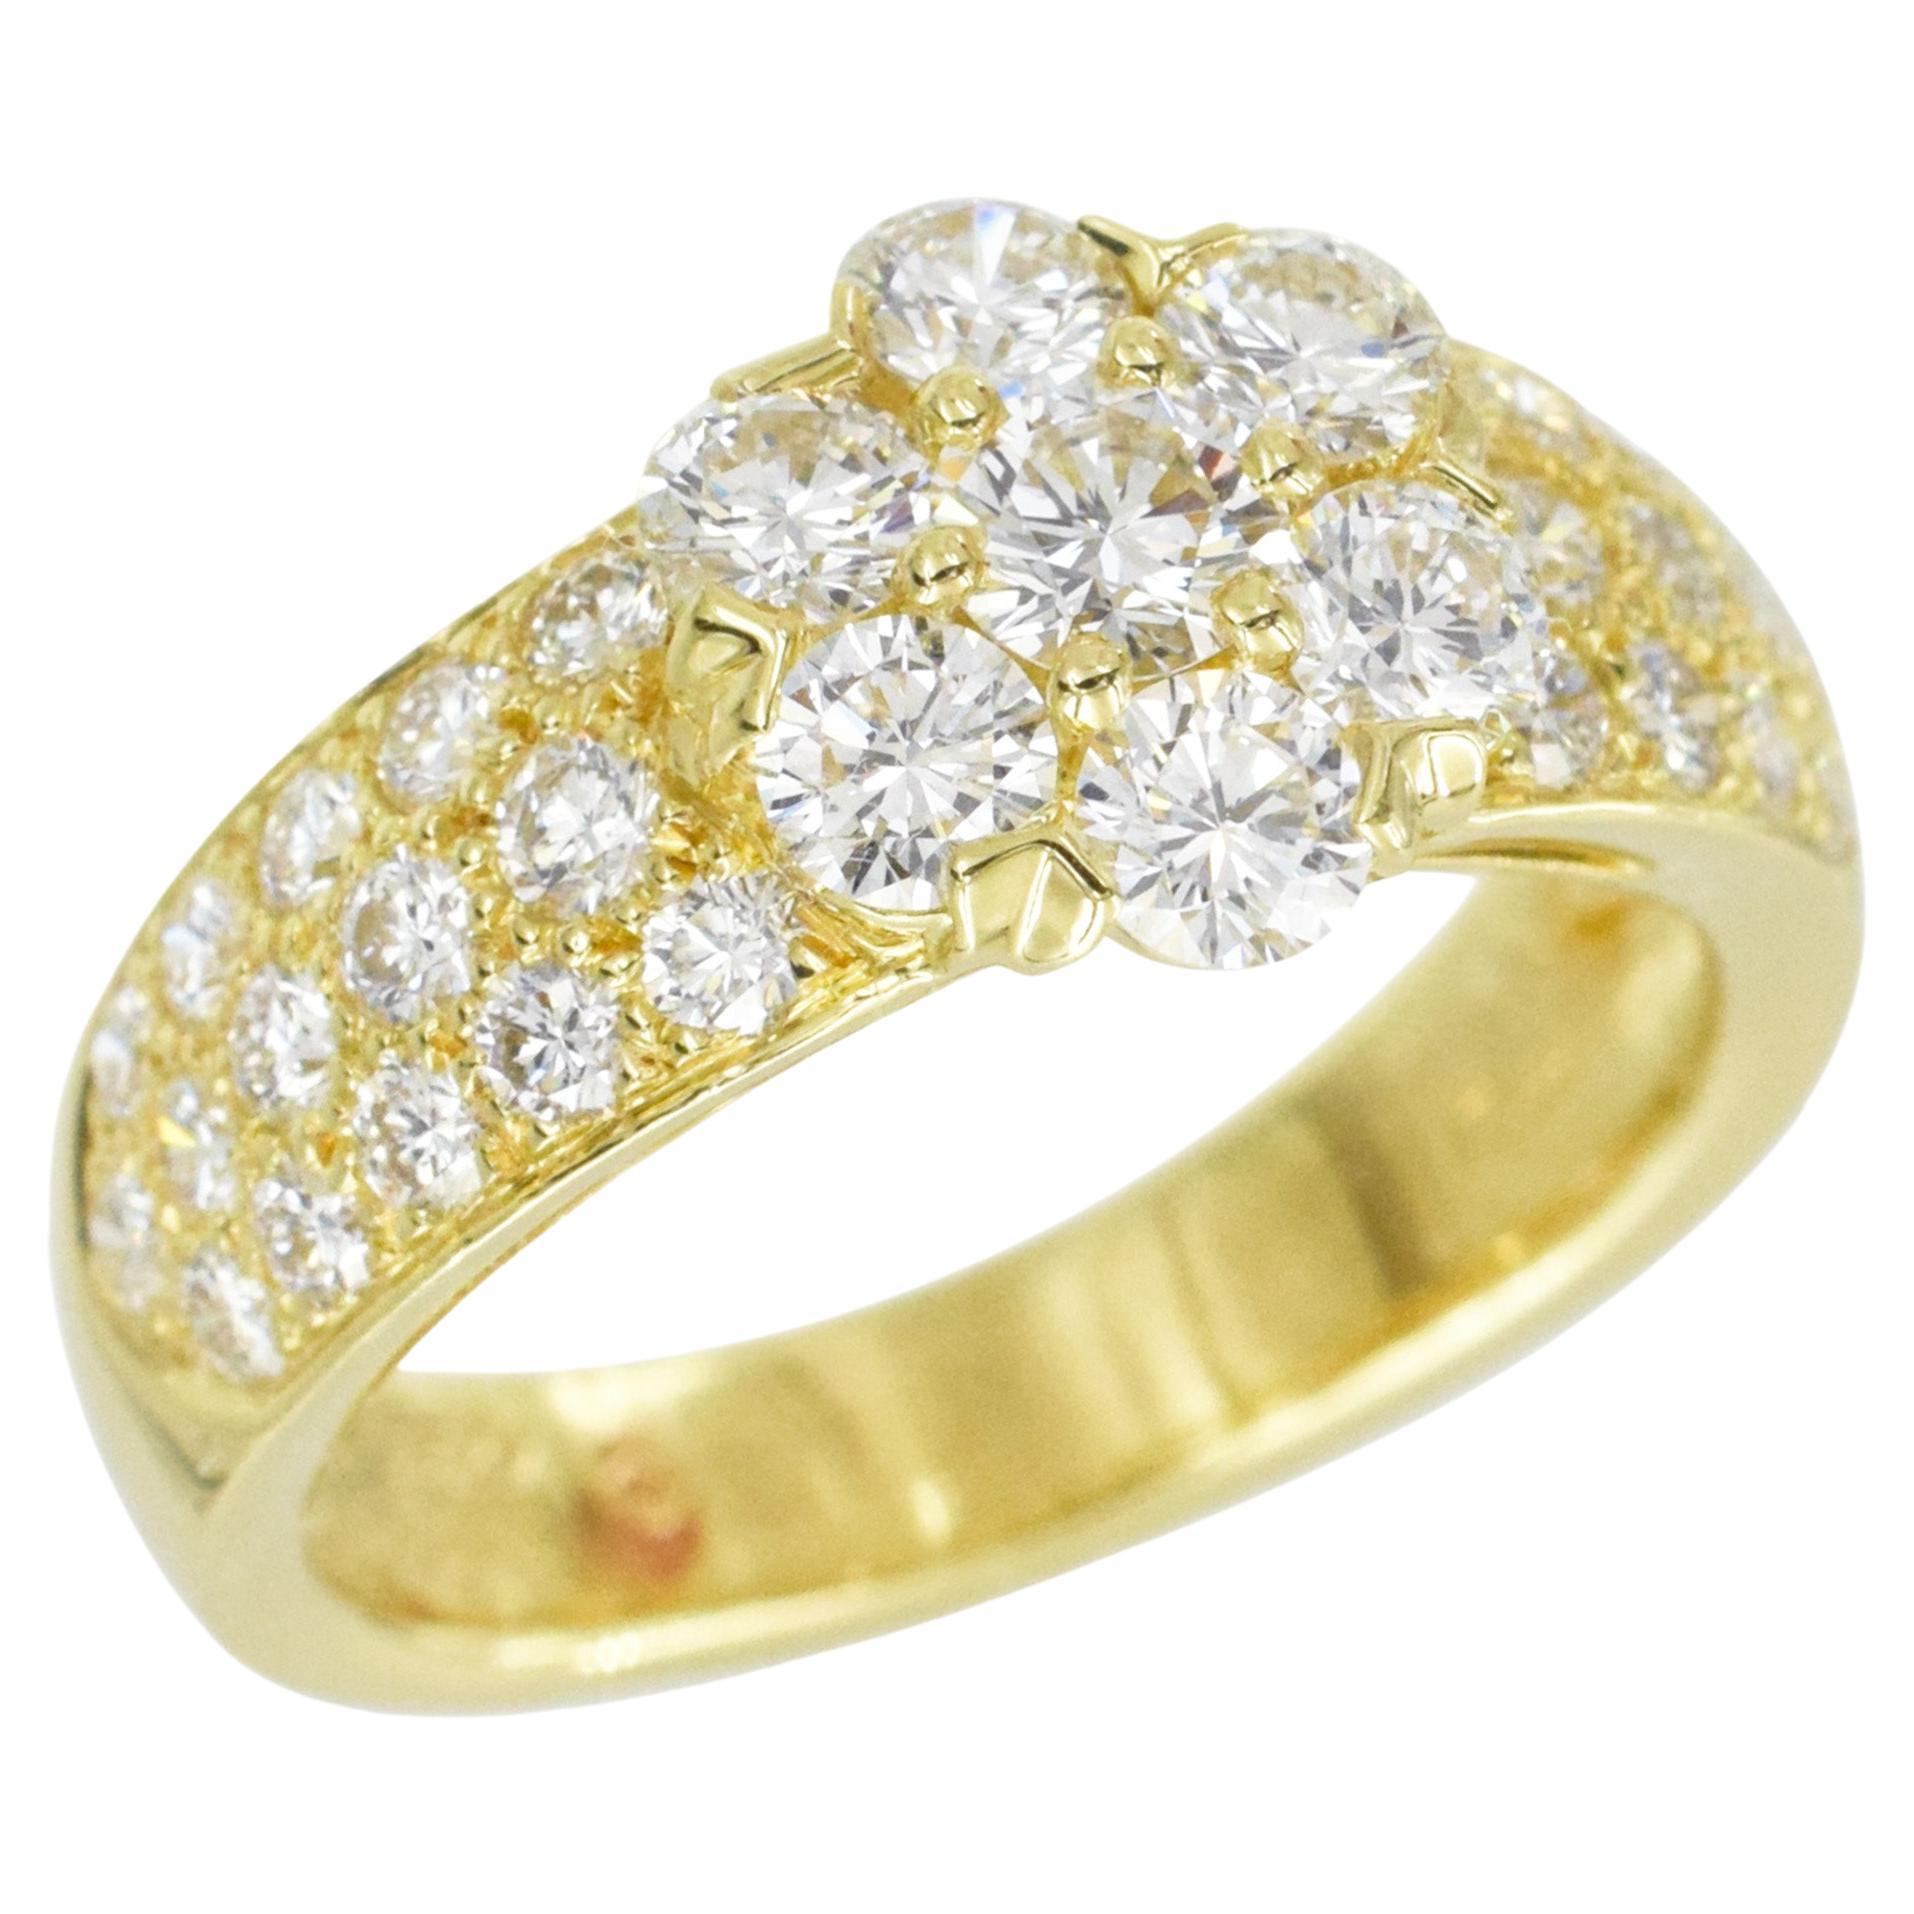 Van Cleef & Arpels "Fleurette" Diamond Ring For Sale